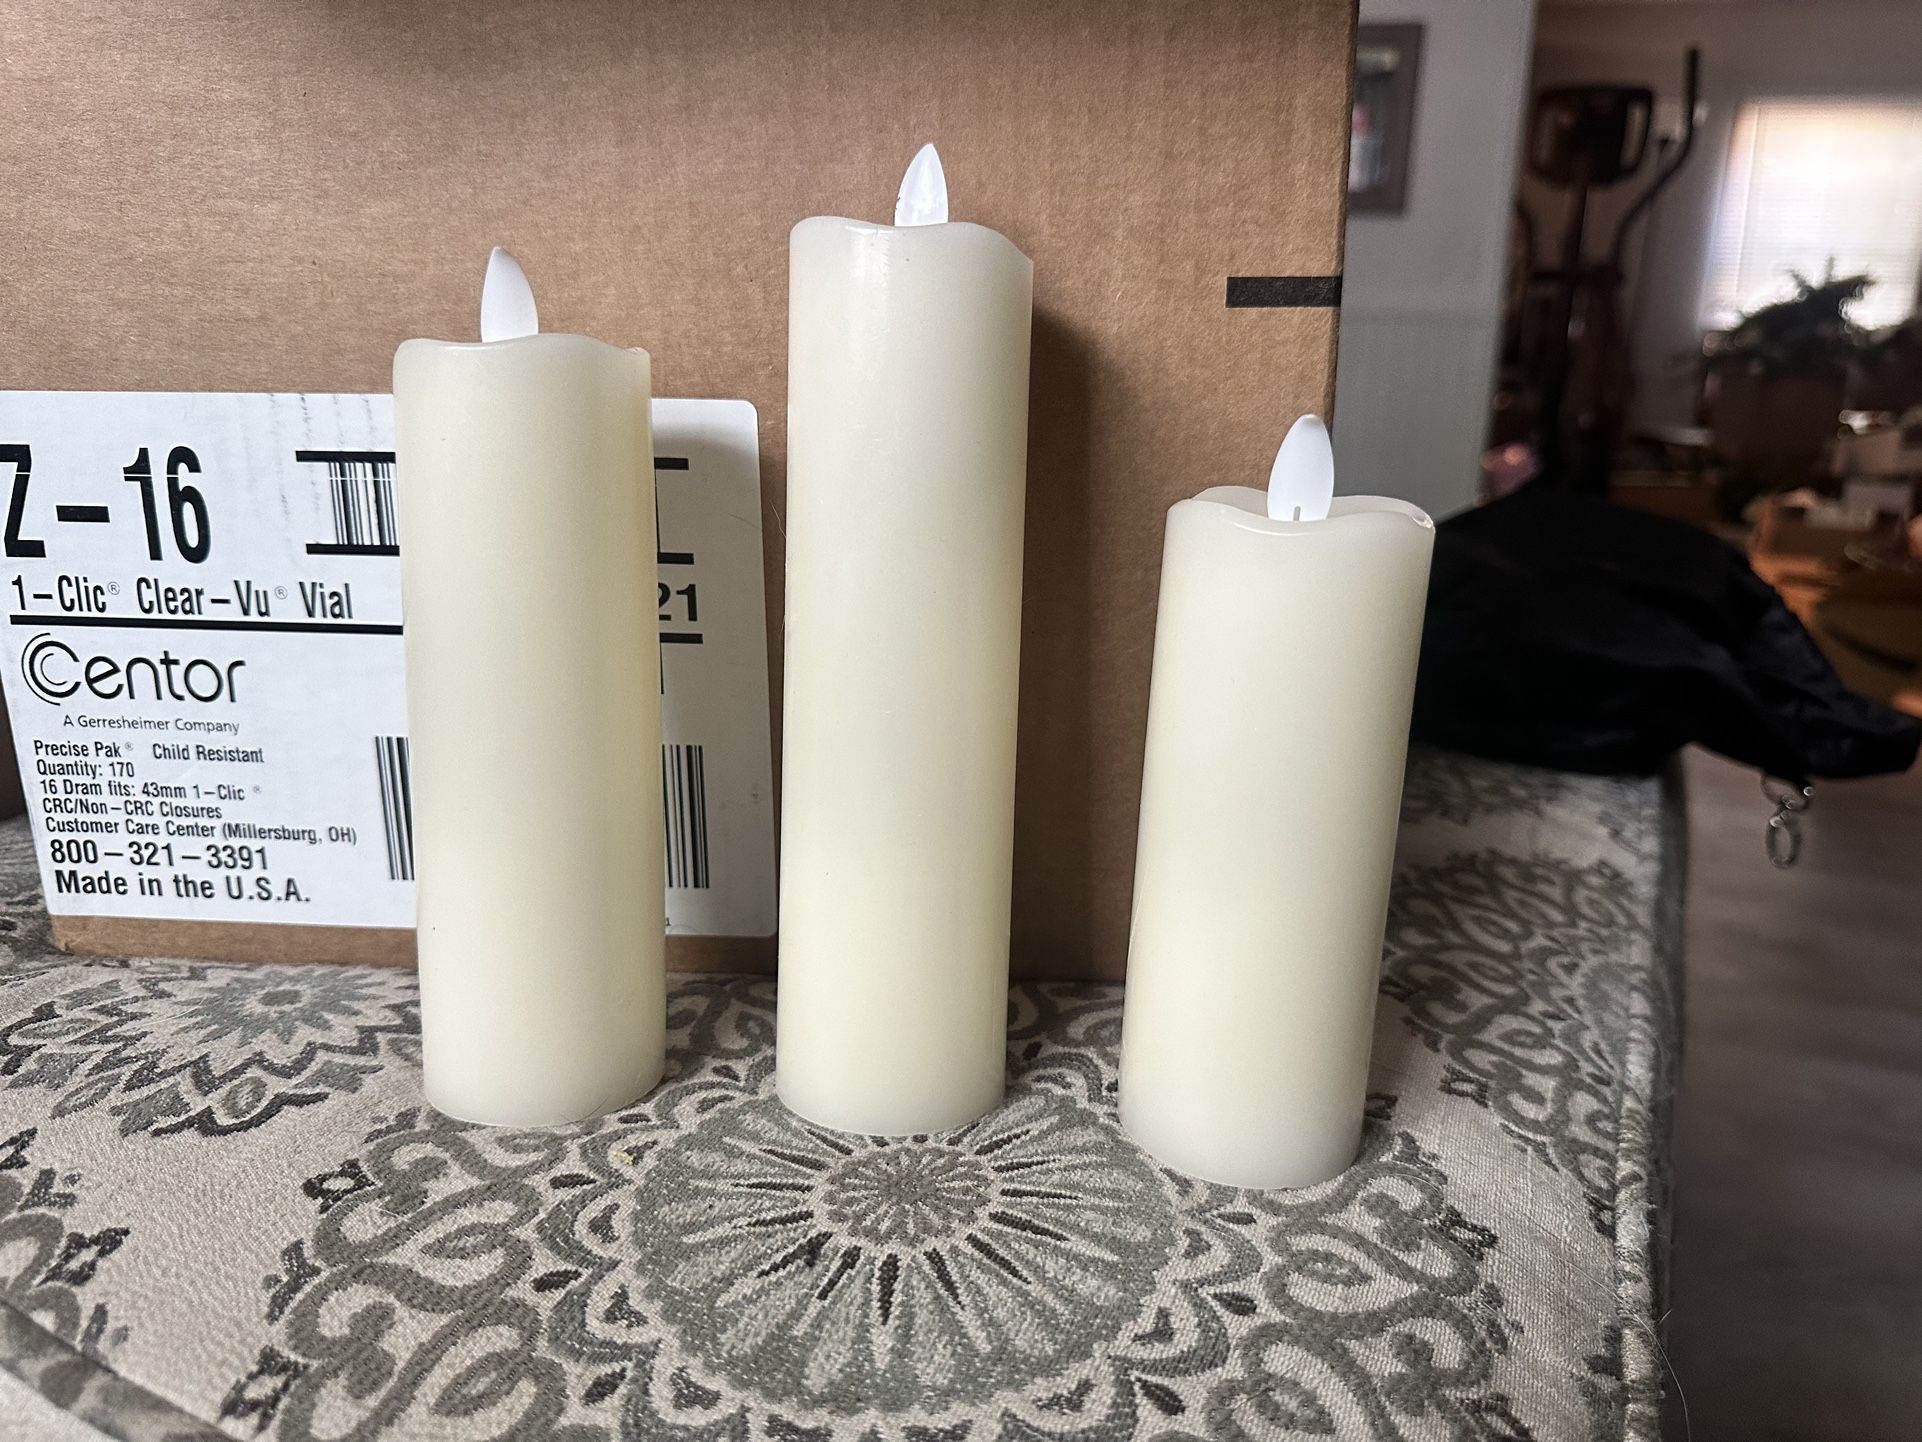 5 Piece Flameless Candles 